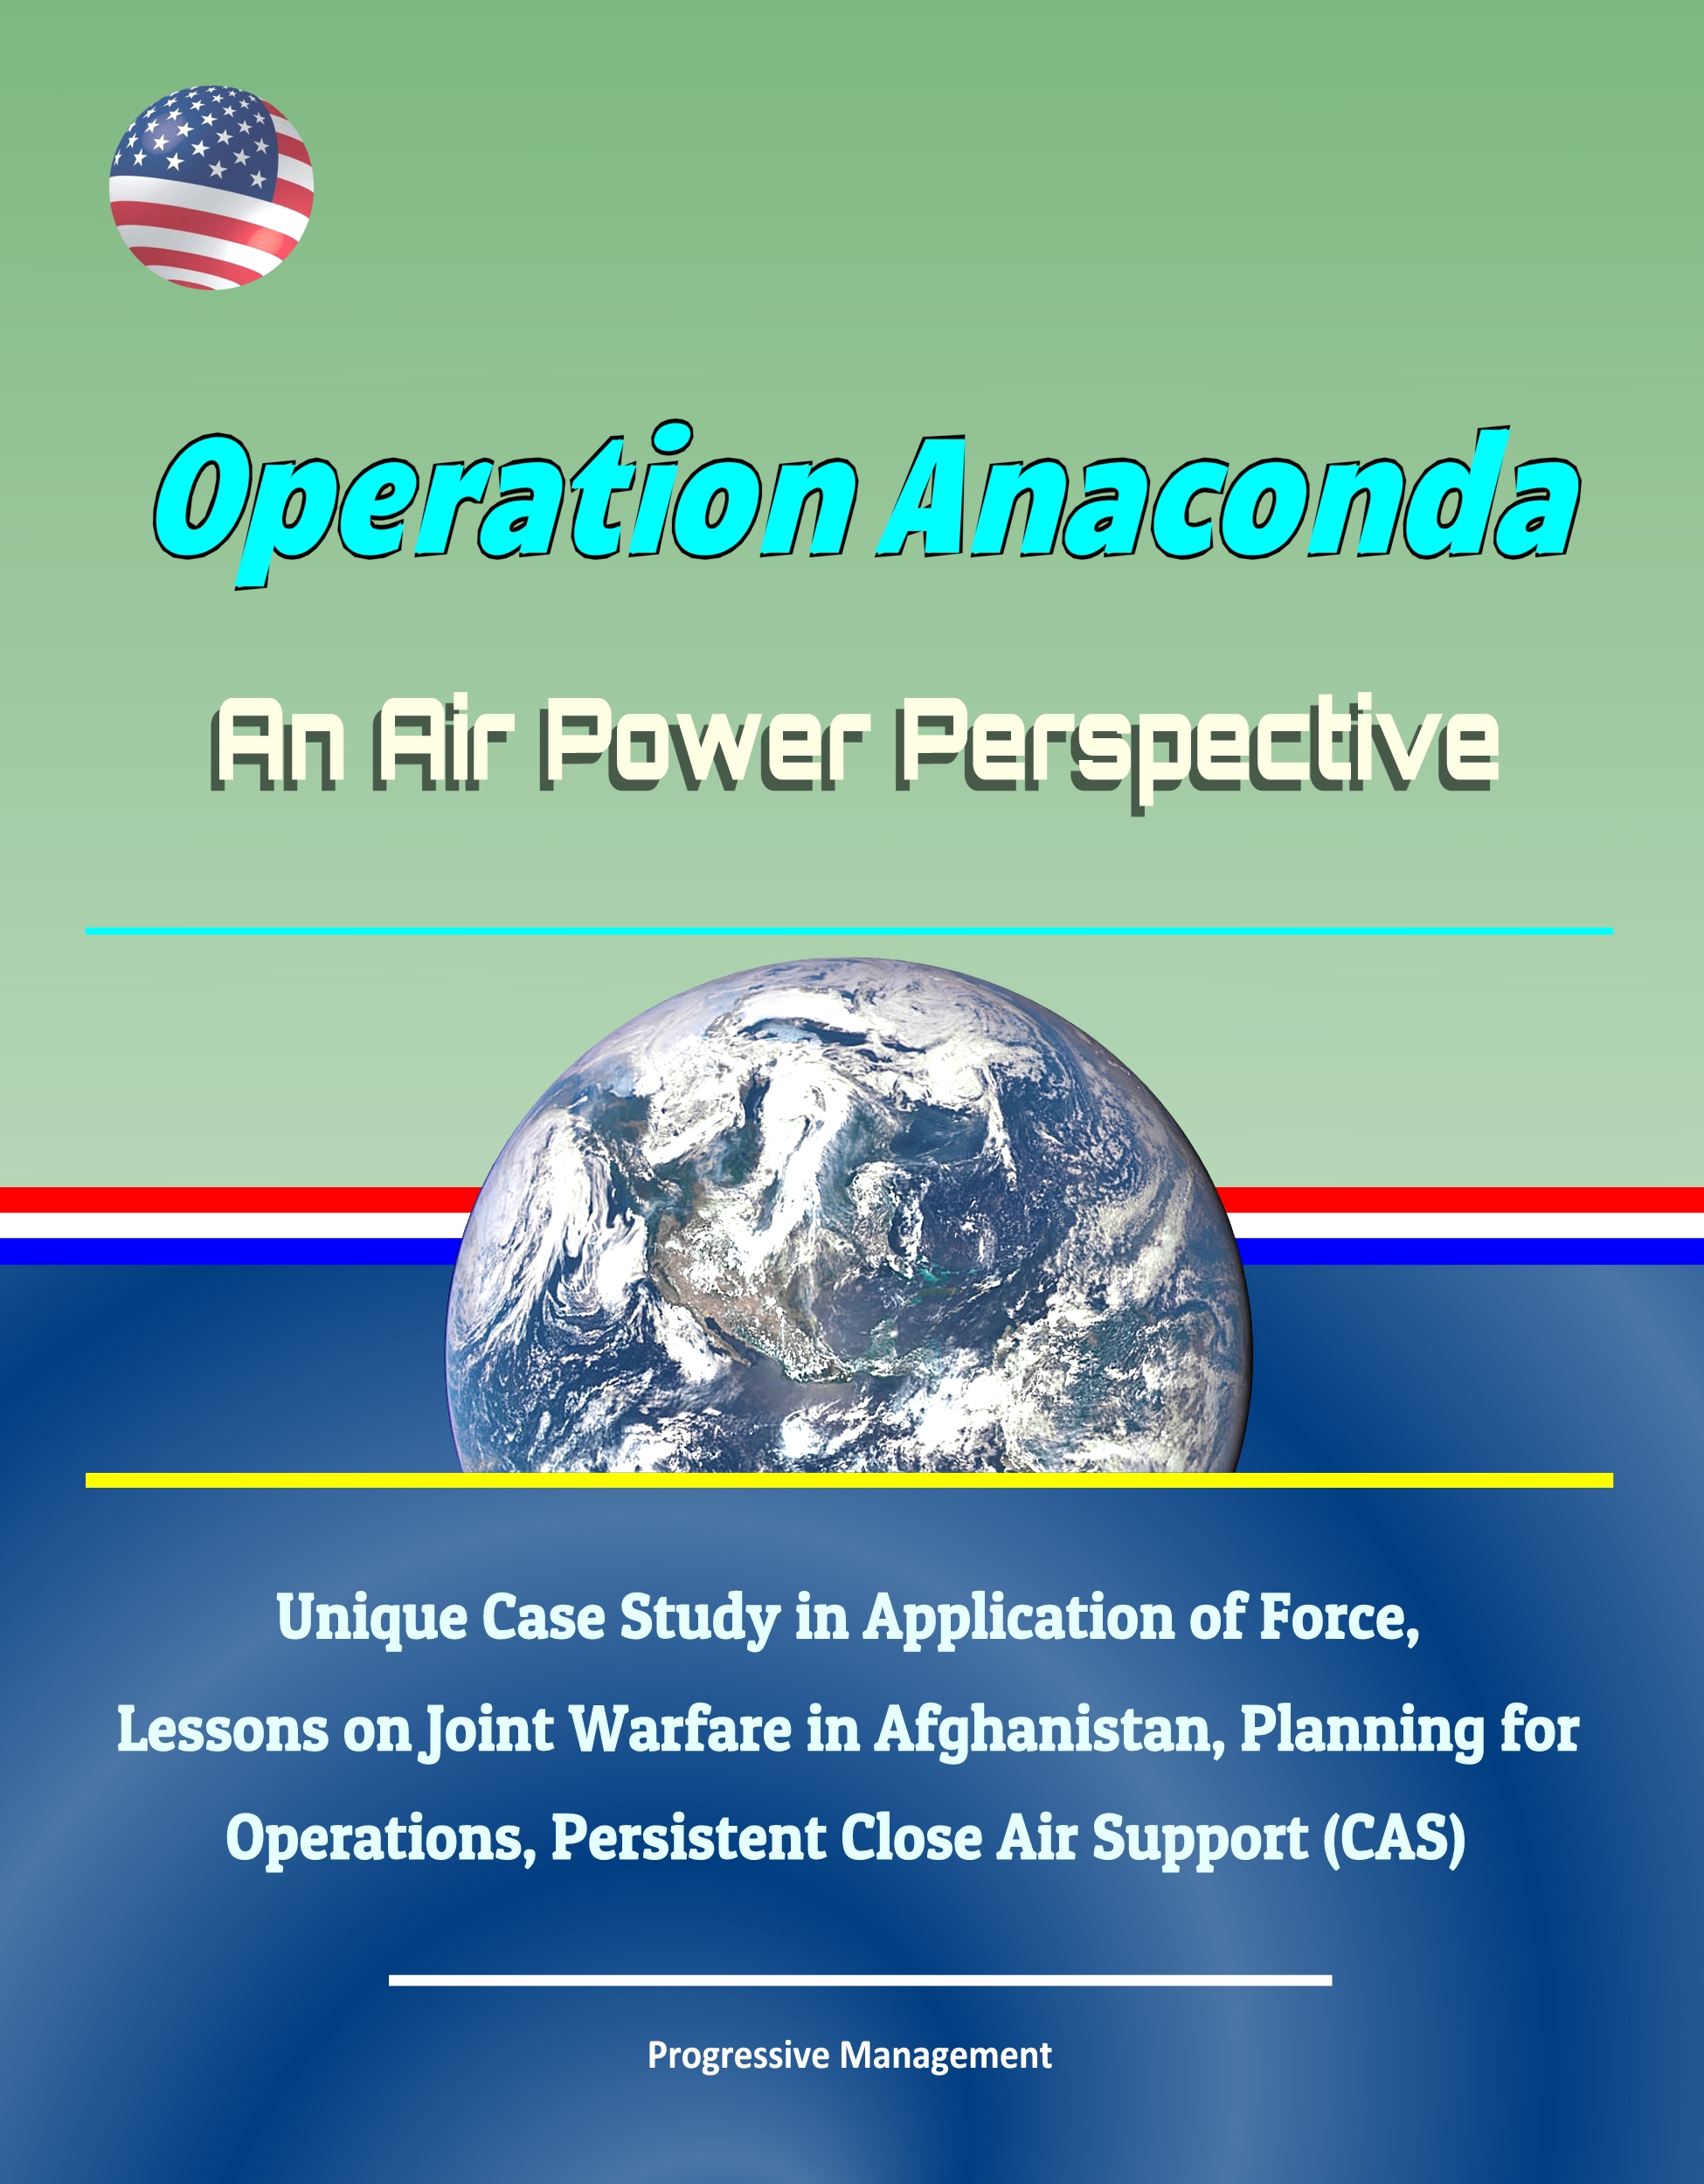 Operation Anaconda Case Study Analysis